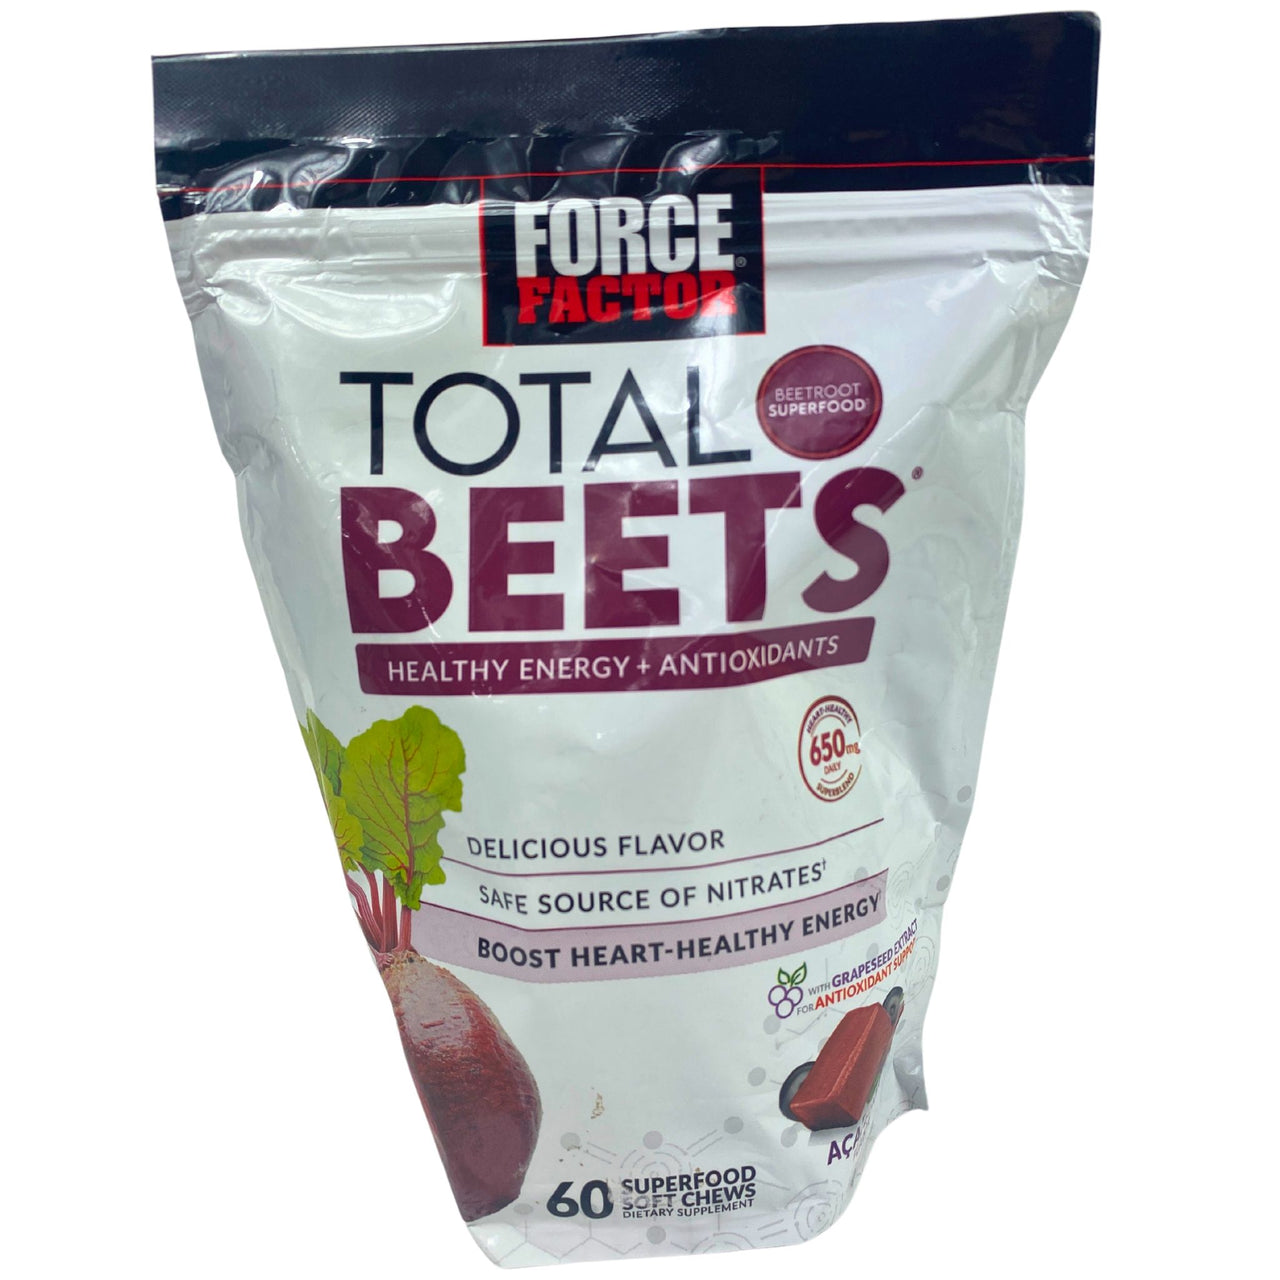 Force Factor Total Beets Healthy Energy + Antioxidants Delicious Flavor 